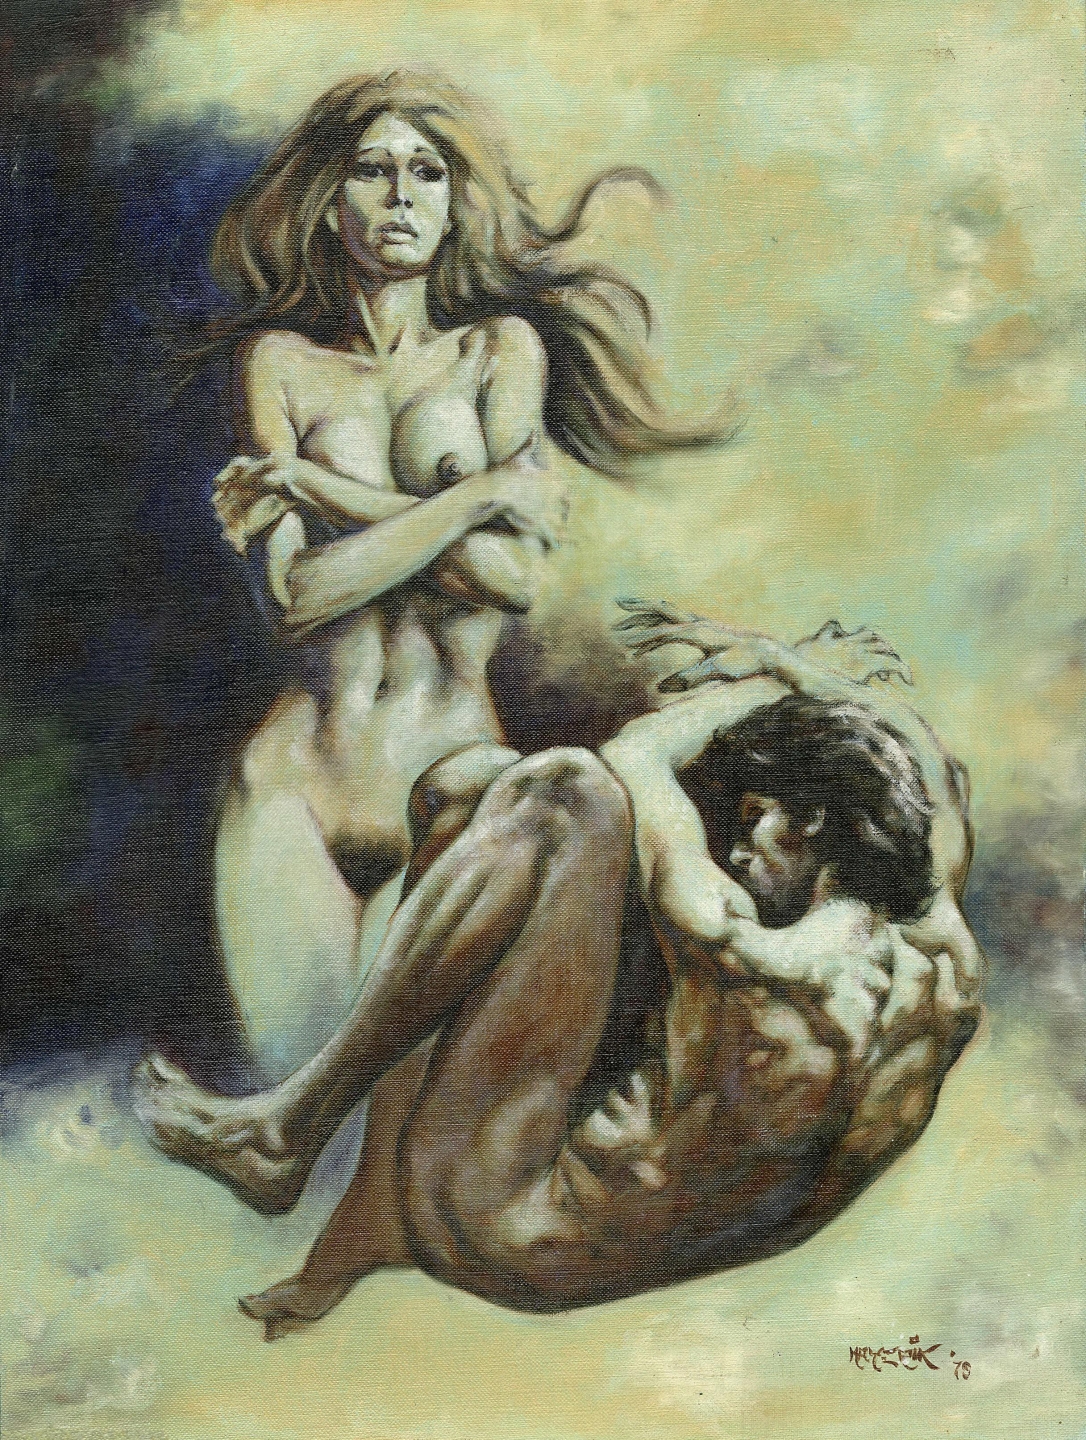 Couple by Val Mayerik, 1979